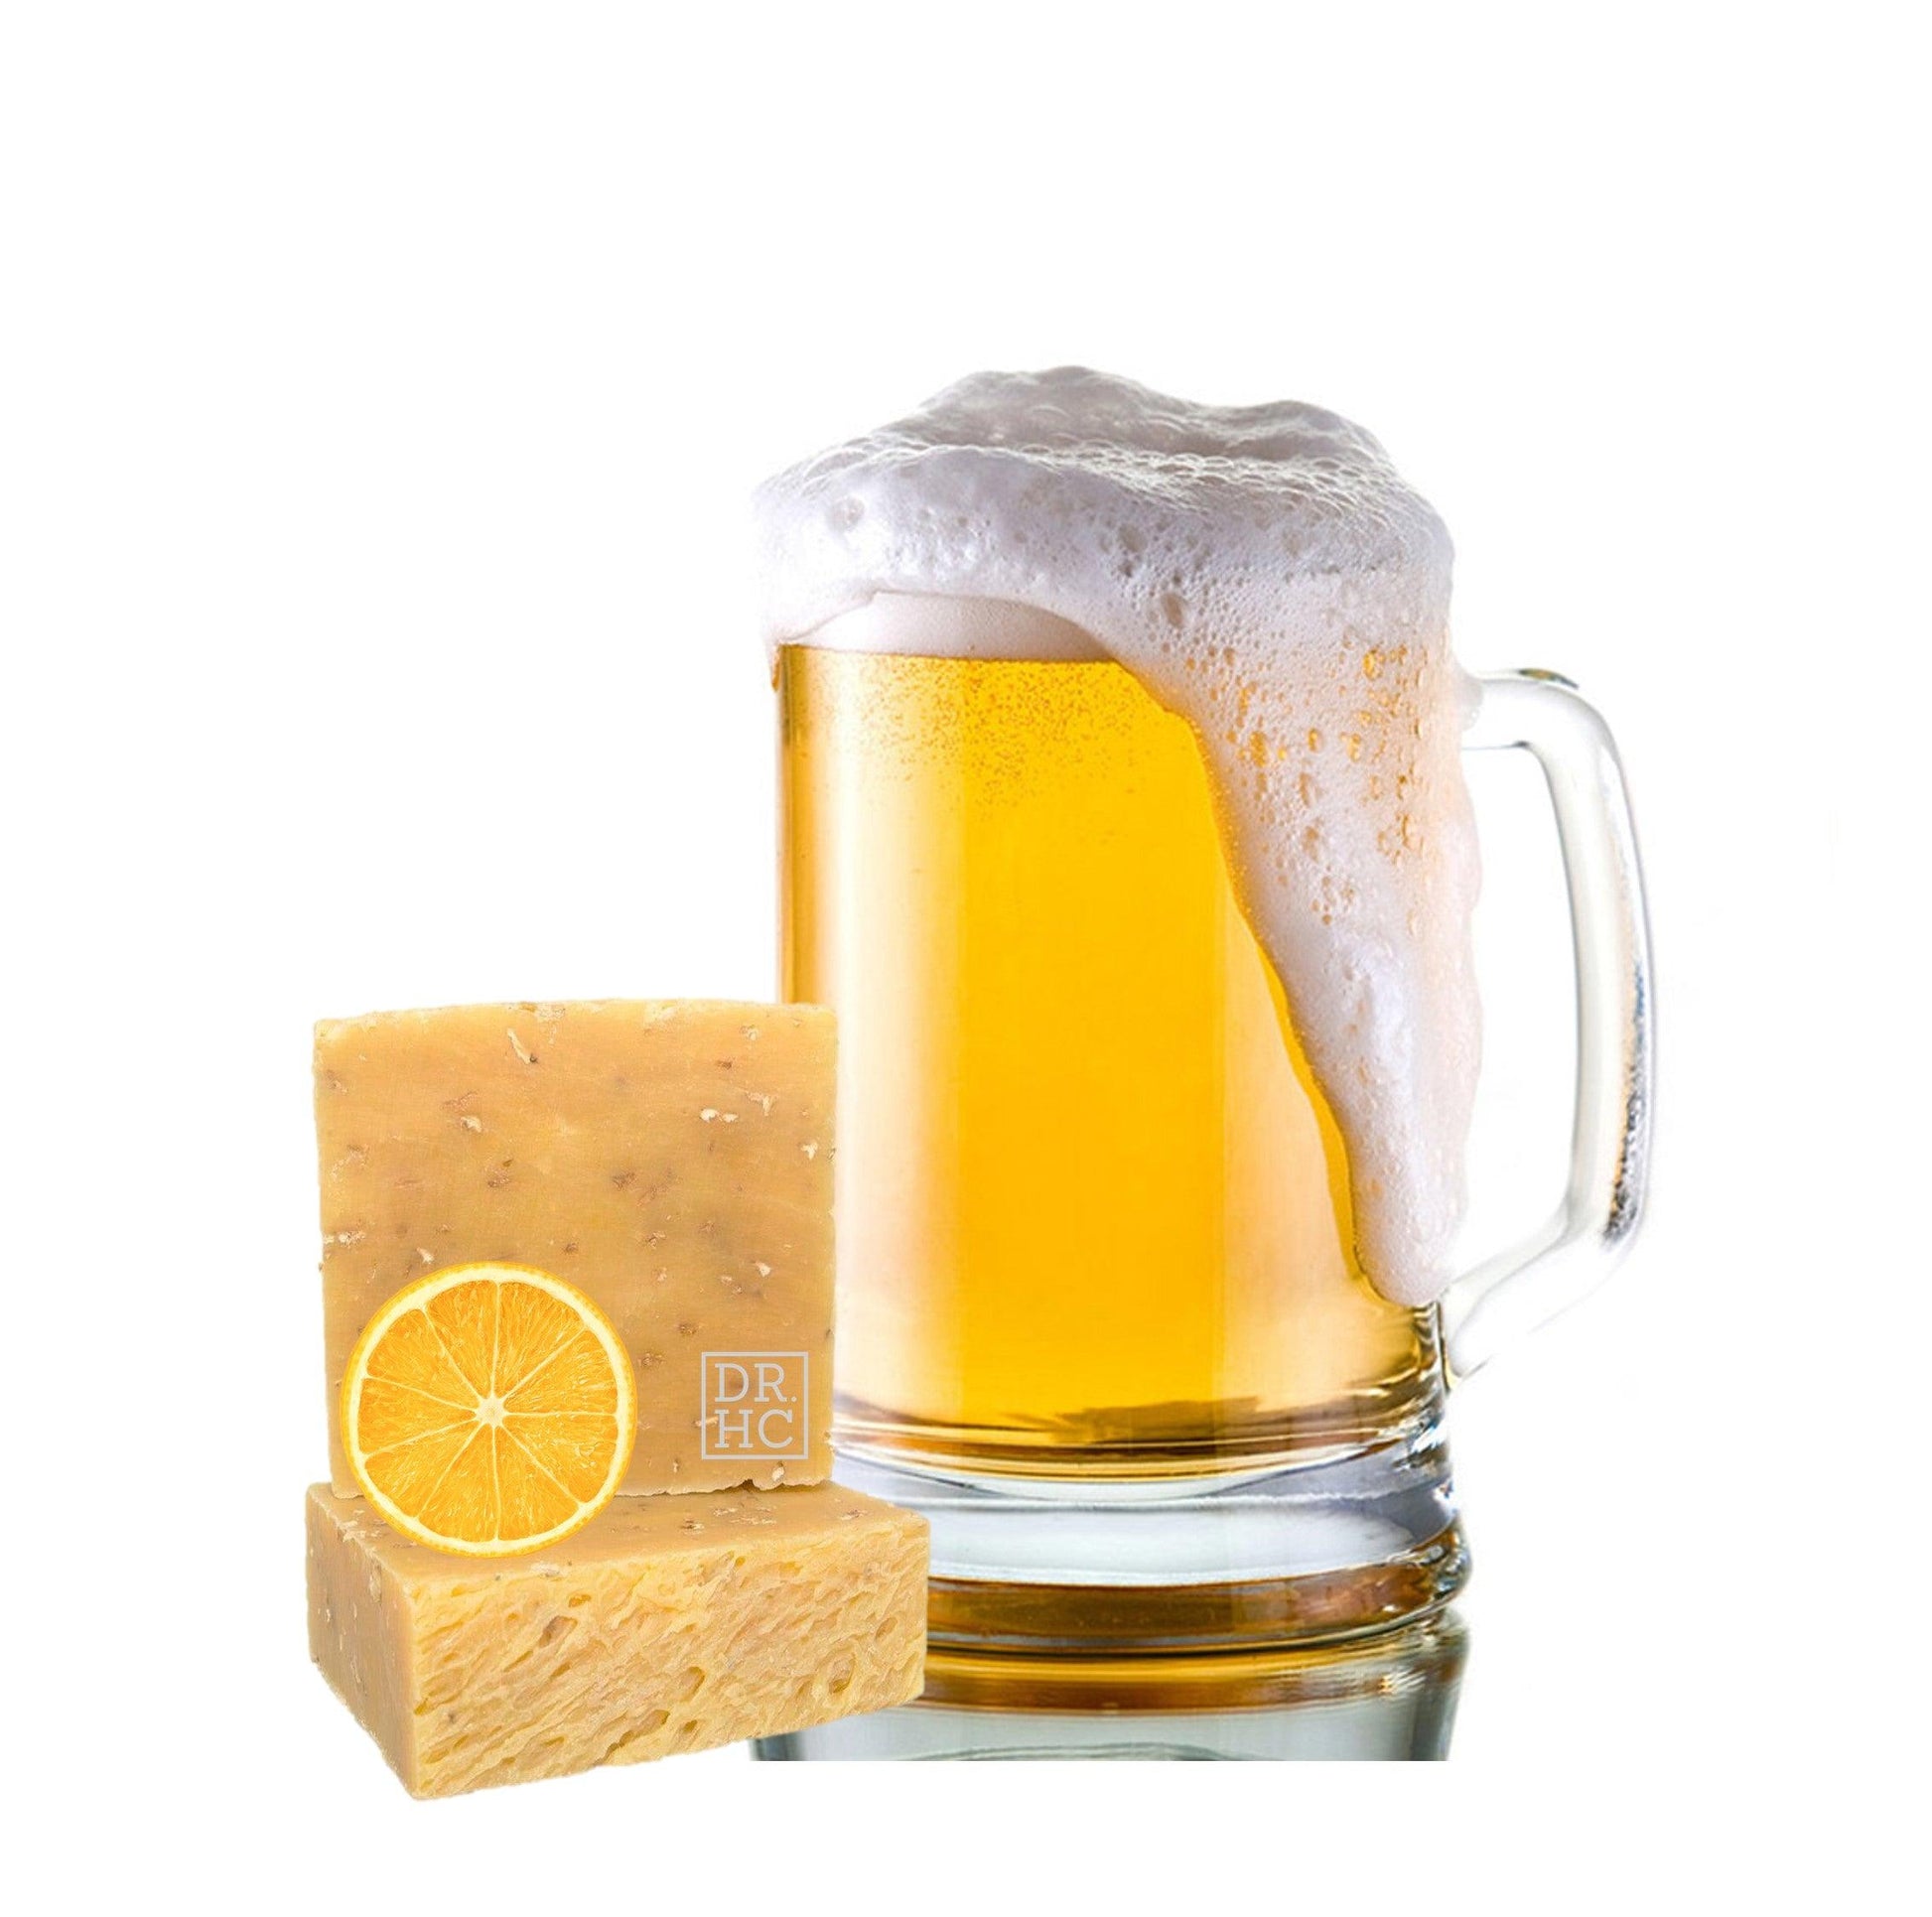 DR.HC All-Natural Skincare Face Soap - Citrus Beer (110g, 3.8oz.) (Anti-aging, Skin brightening, Anti-blemish, Exfoliating...)-4